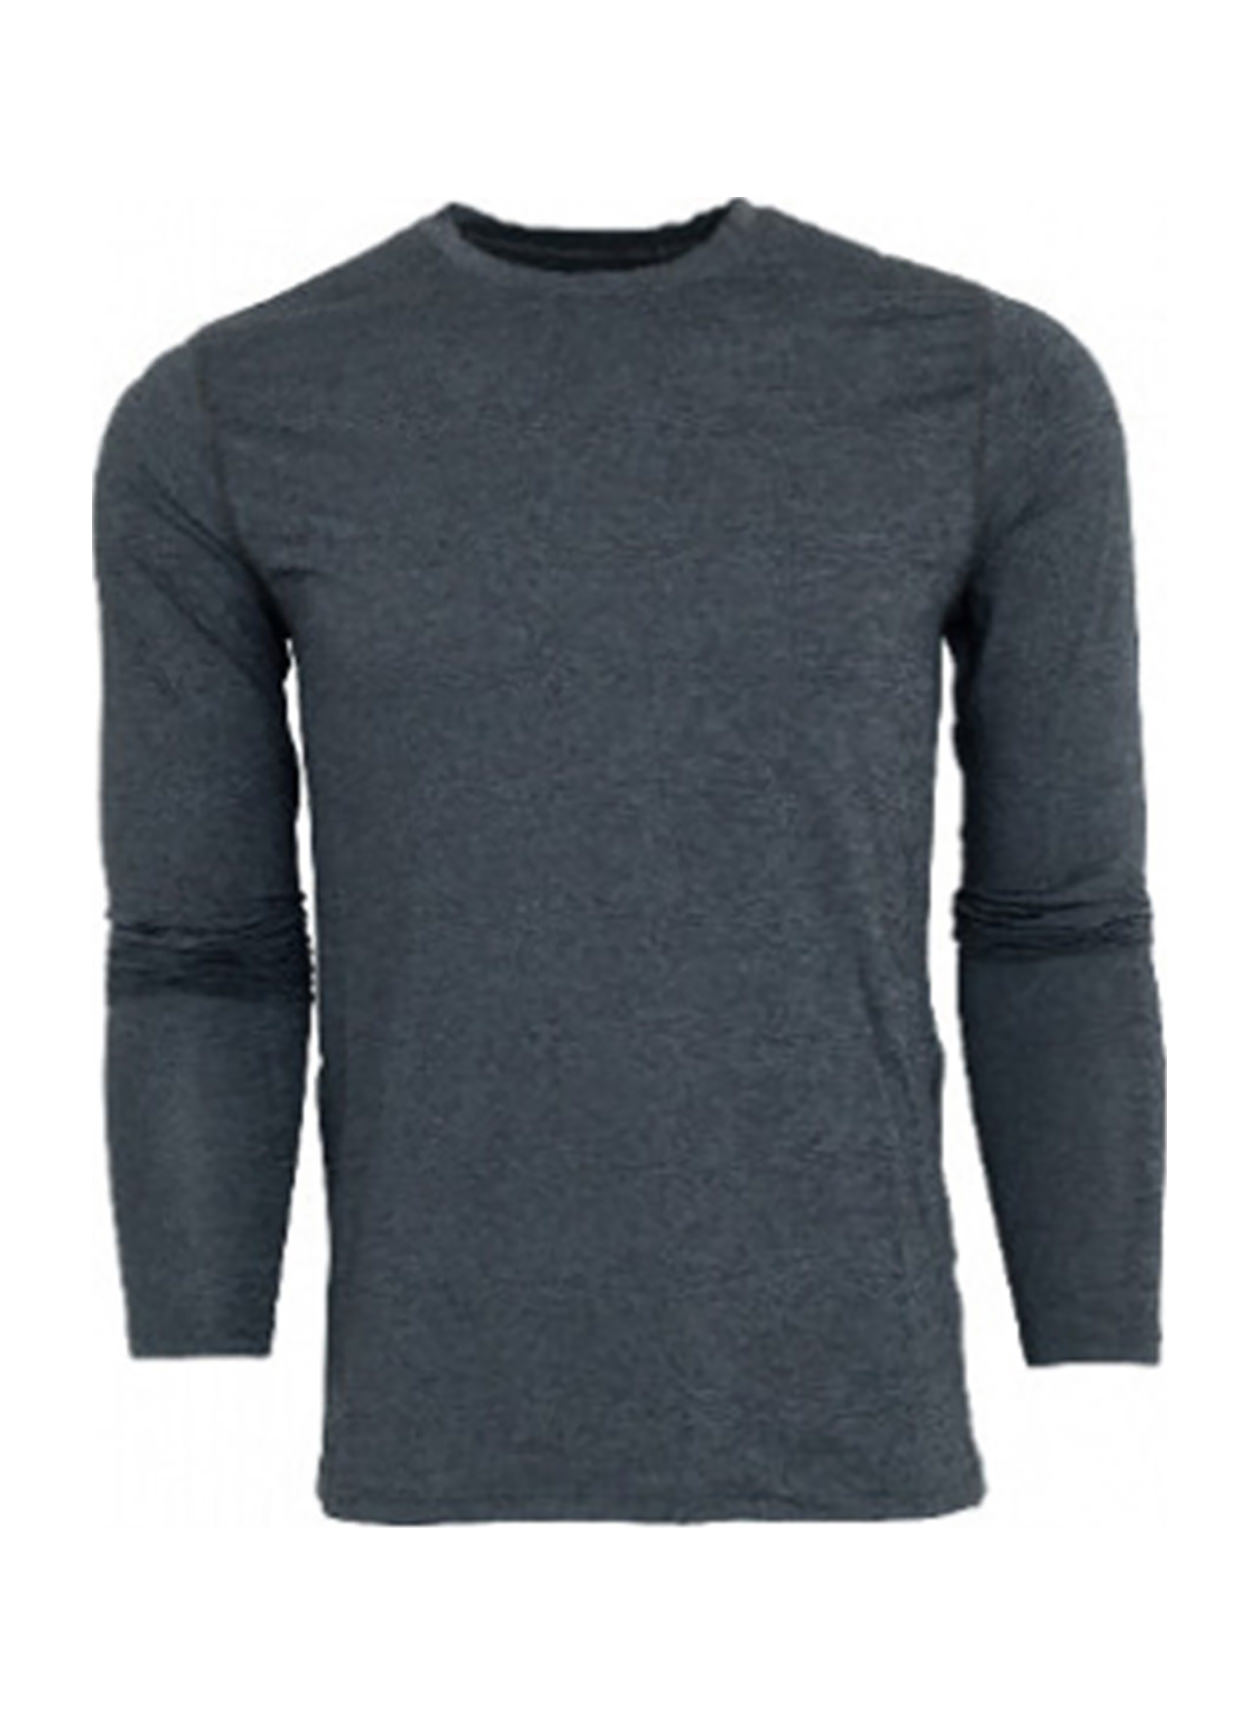 Greyson Men's Shepherd Guide Sport Long-Sleeve T-Shirt